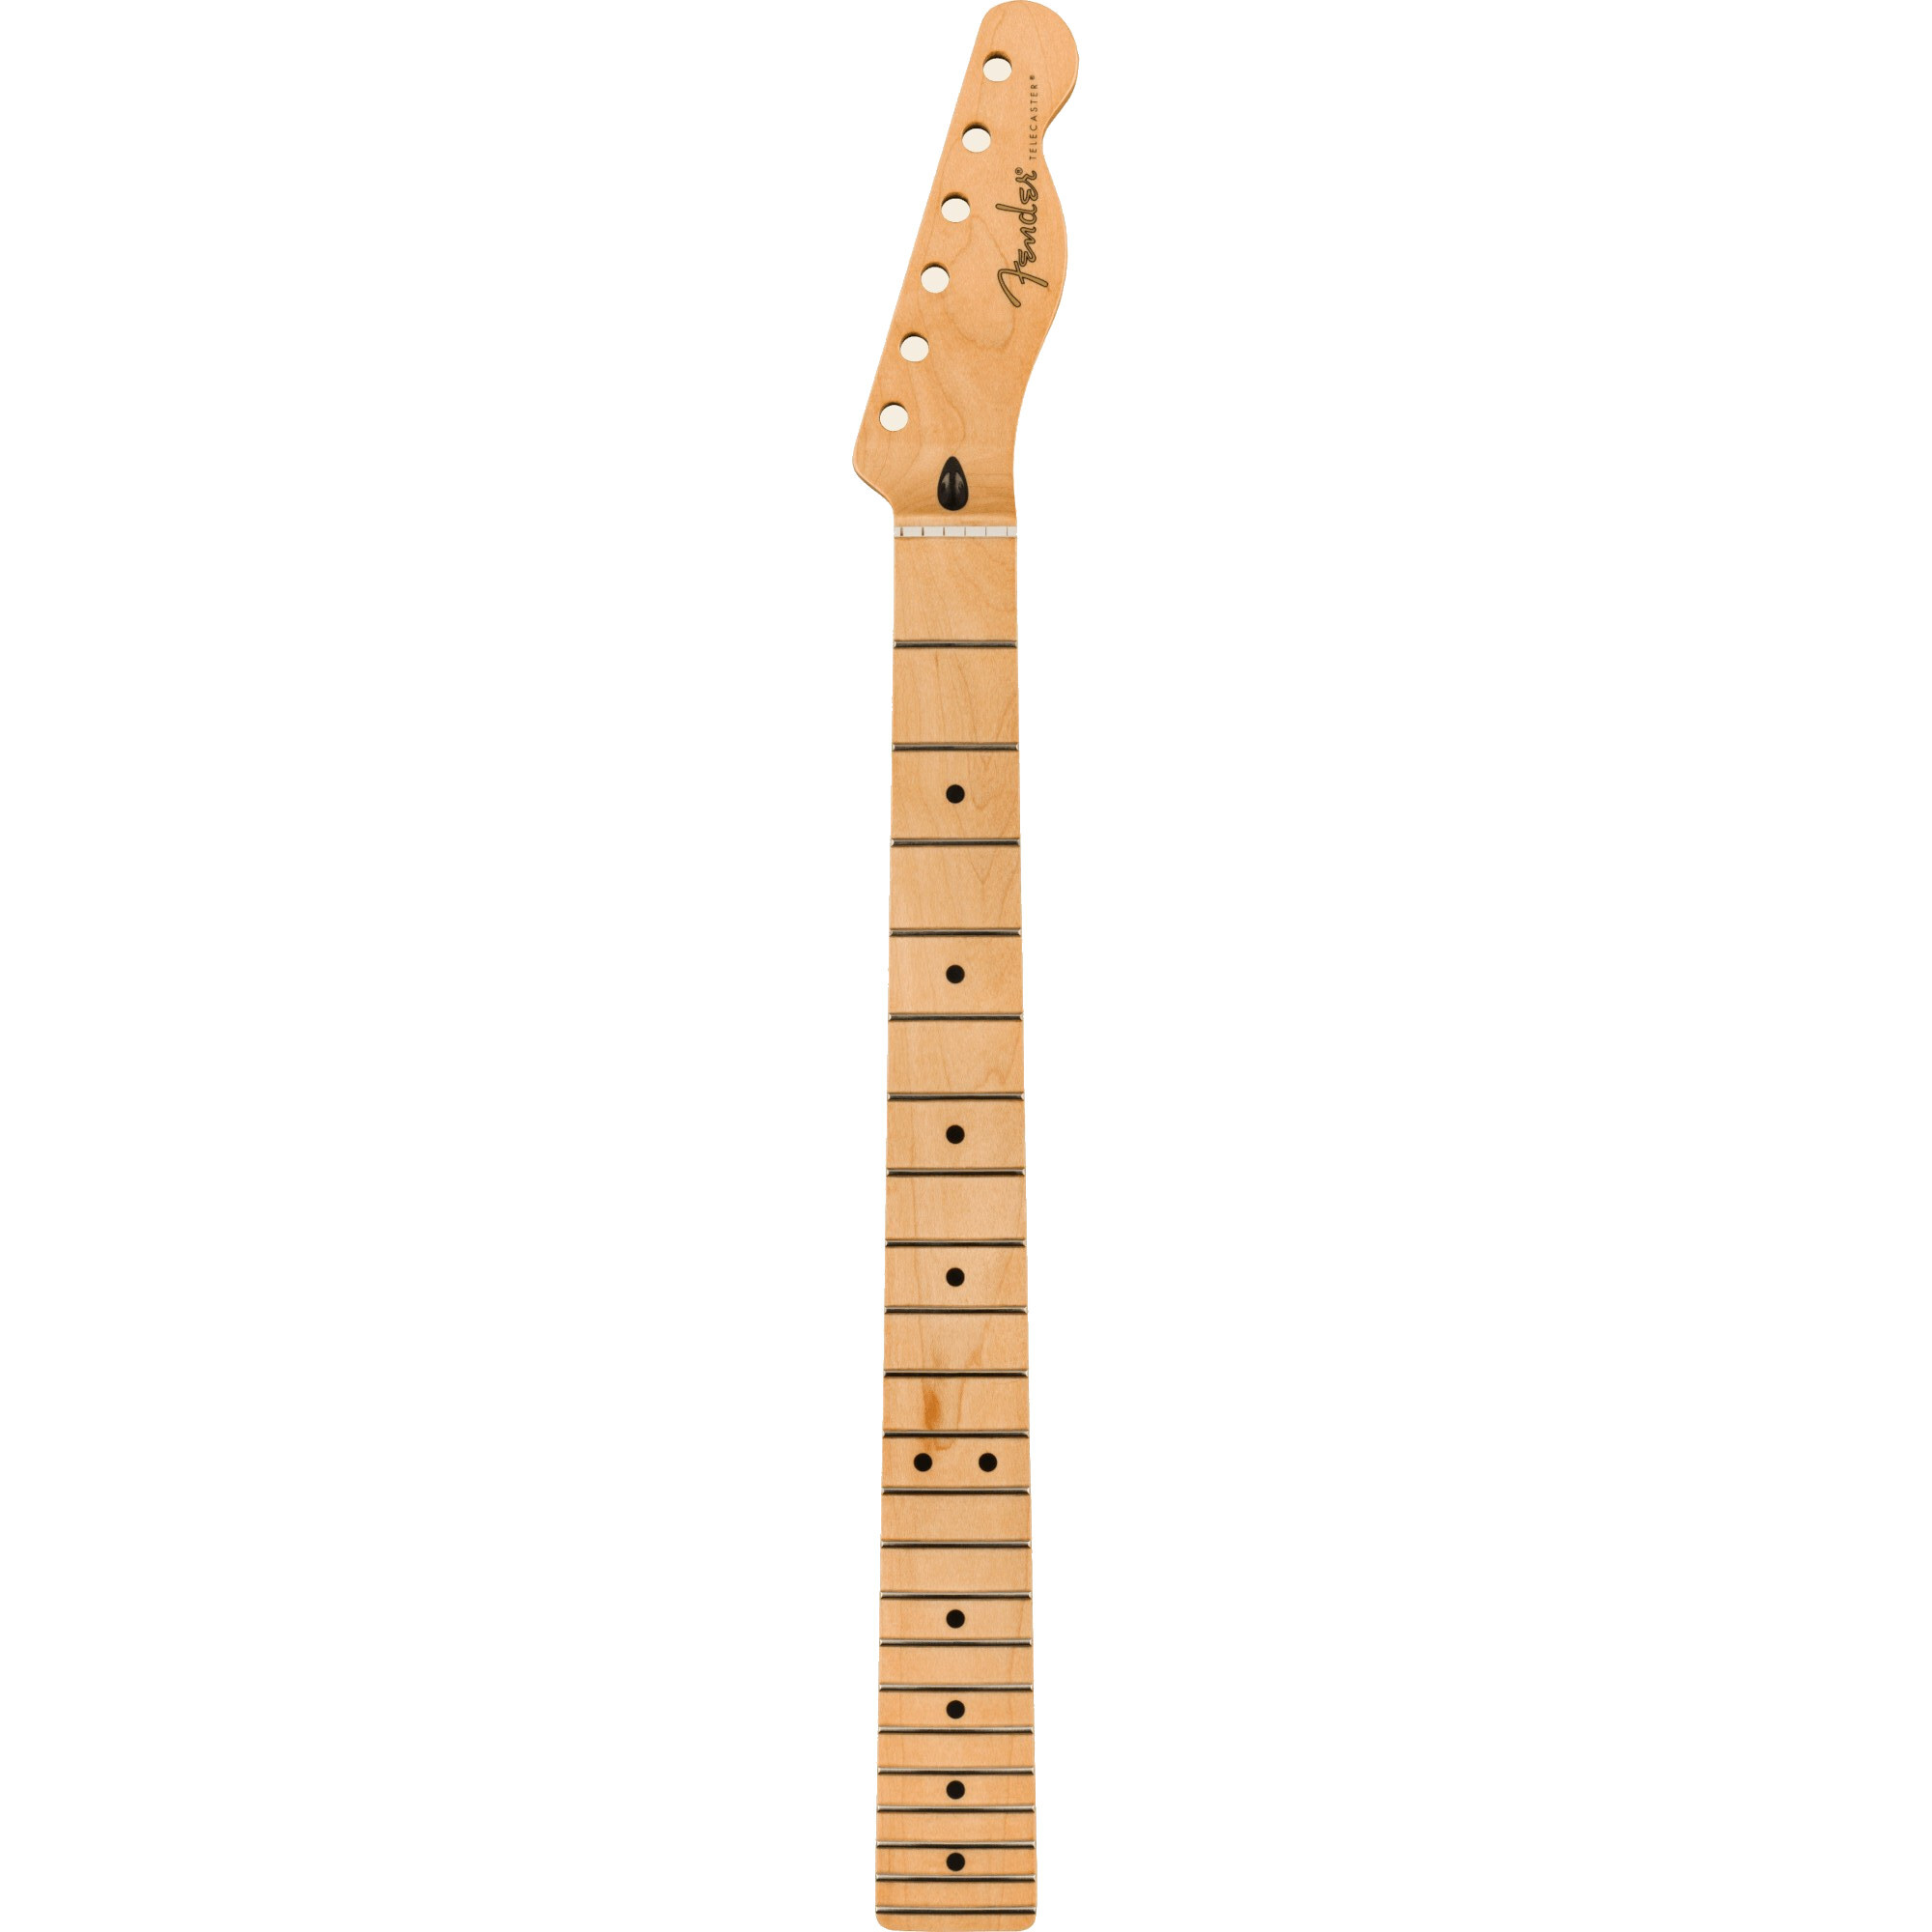 Fender Player Series Telecaster Neck Maple